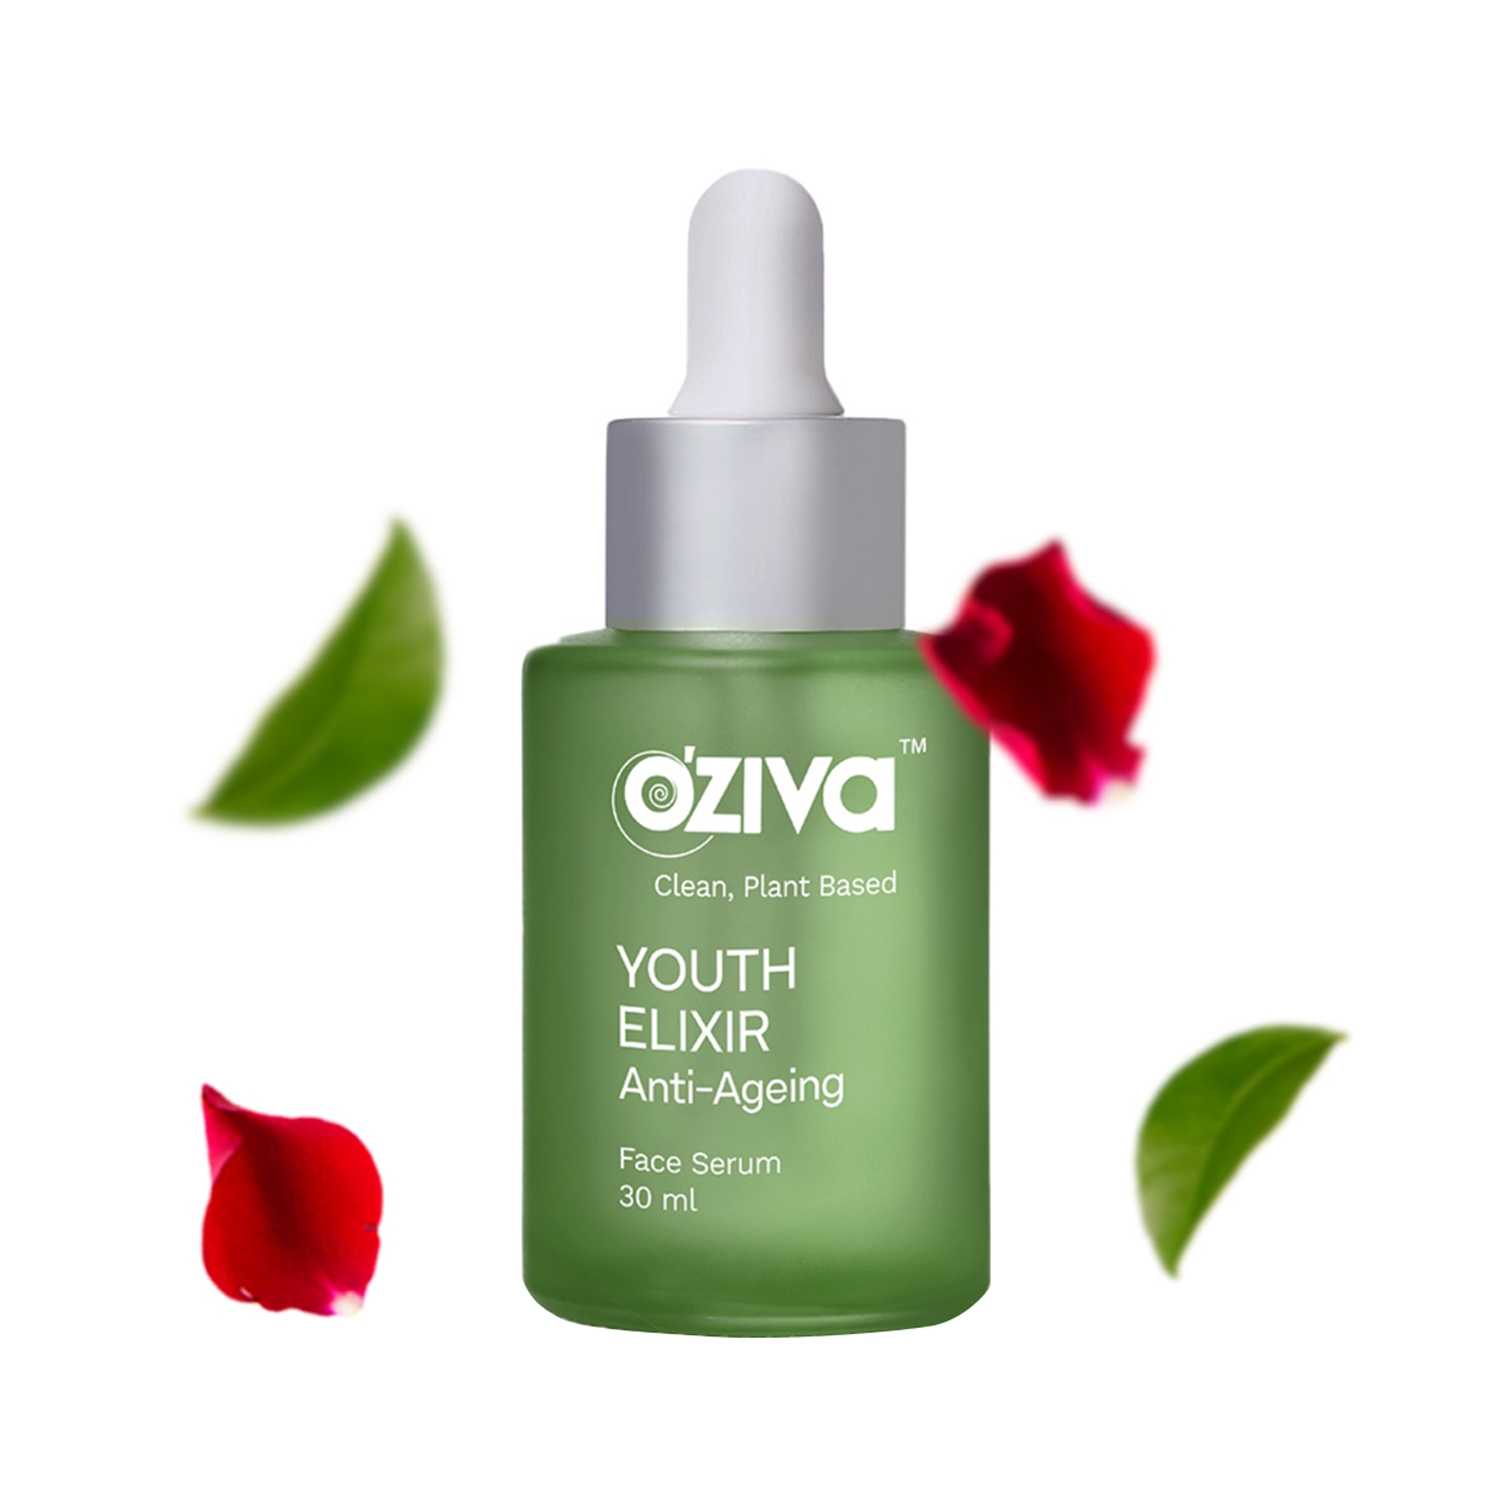 Oziva Youth Elixir Anti-Ageing Face Serum with Phyto Retinol, Rose & Tiare Flower For Wrinkle Reduction & Skin Tightening (30ml)